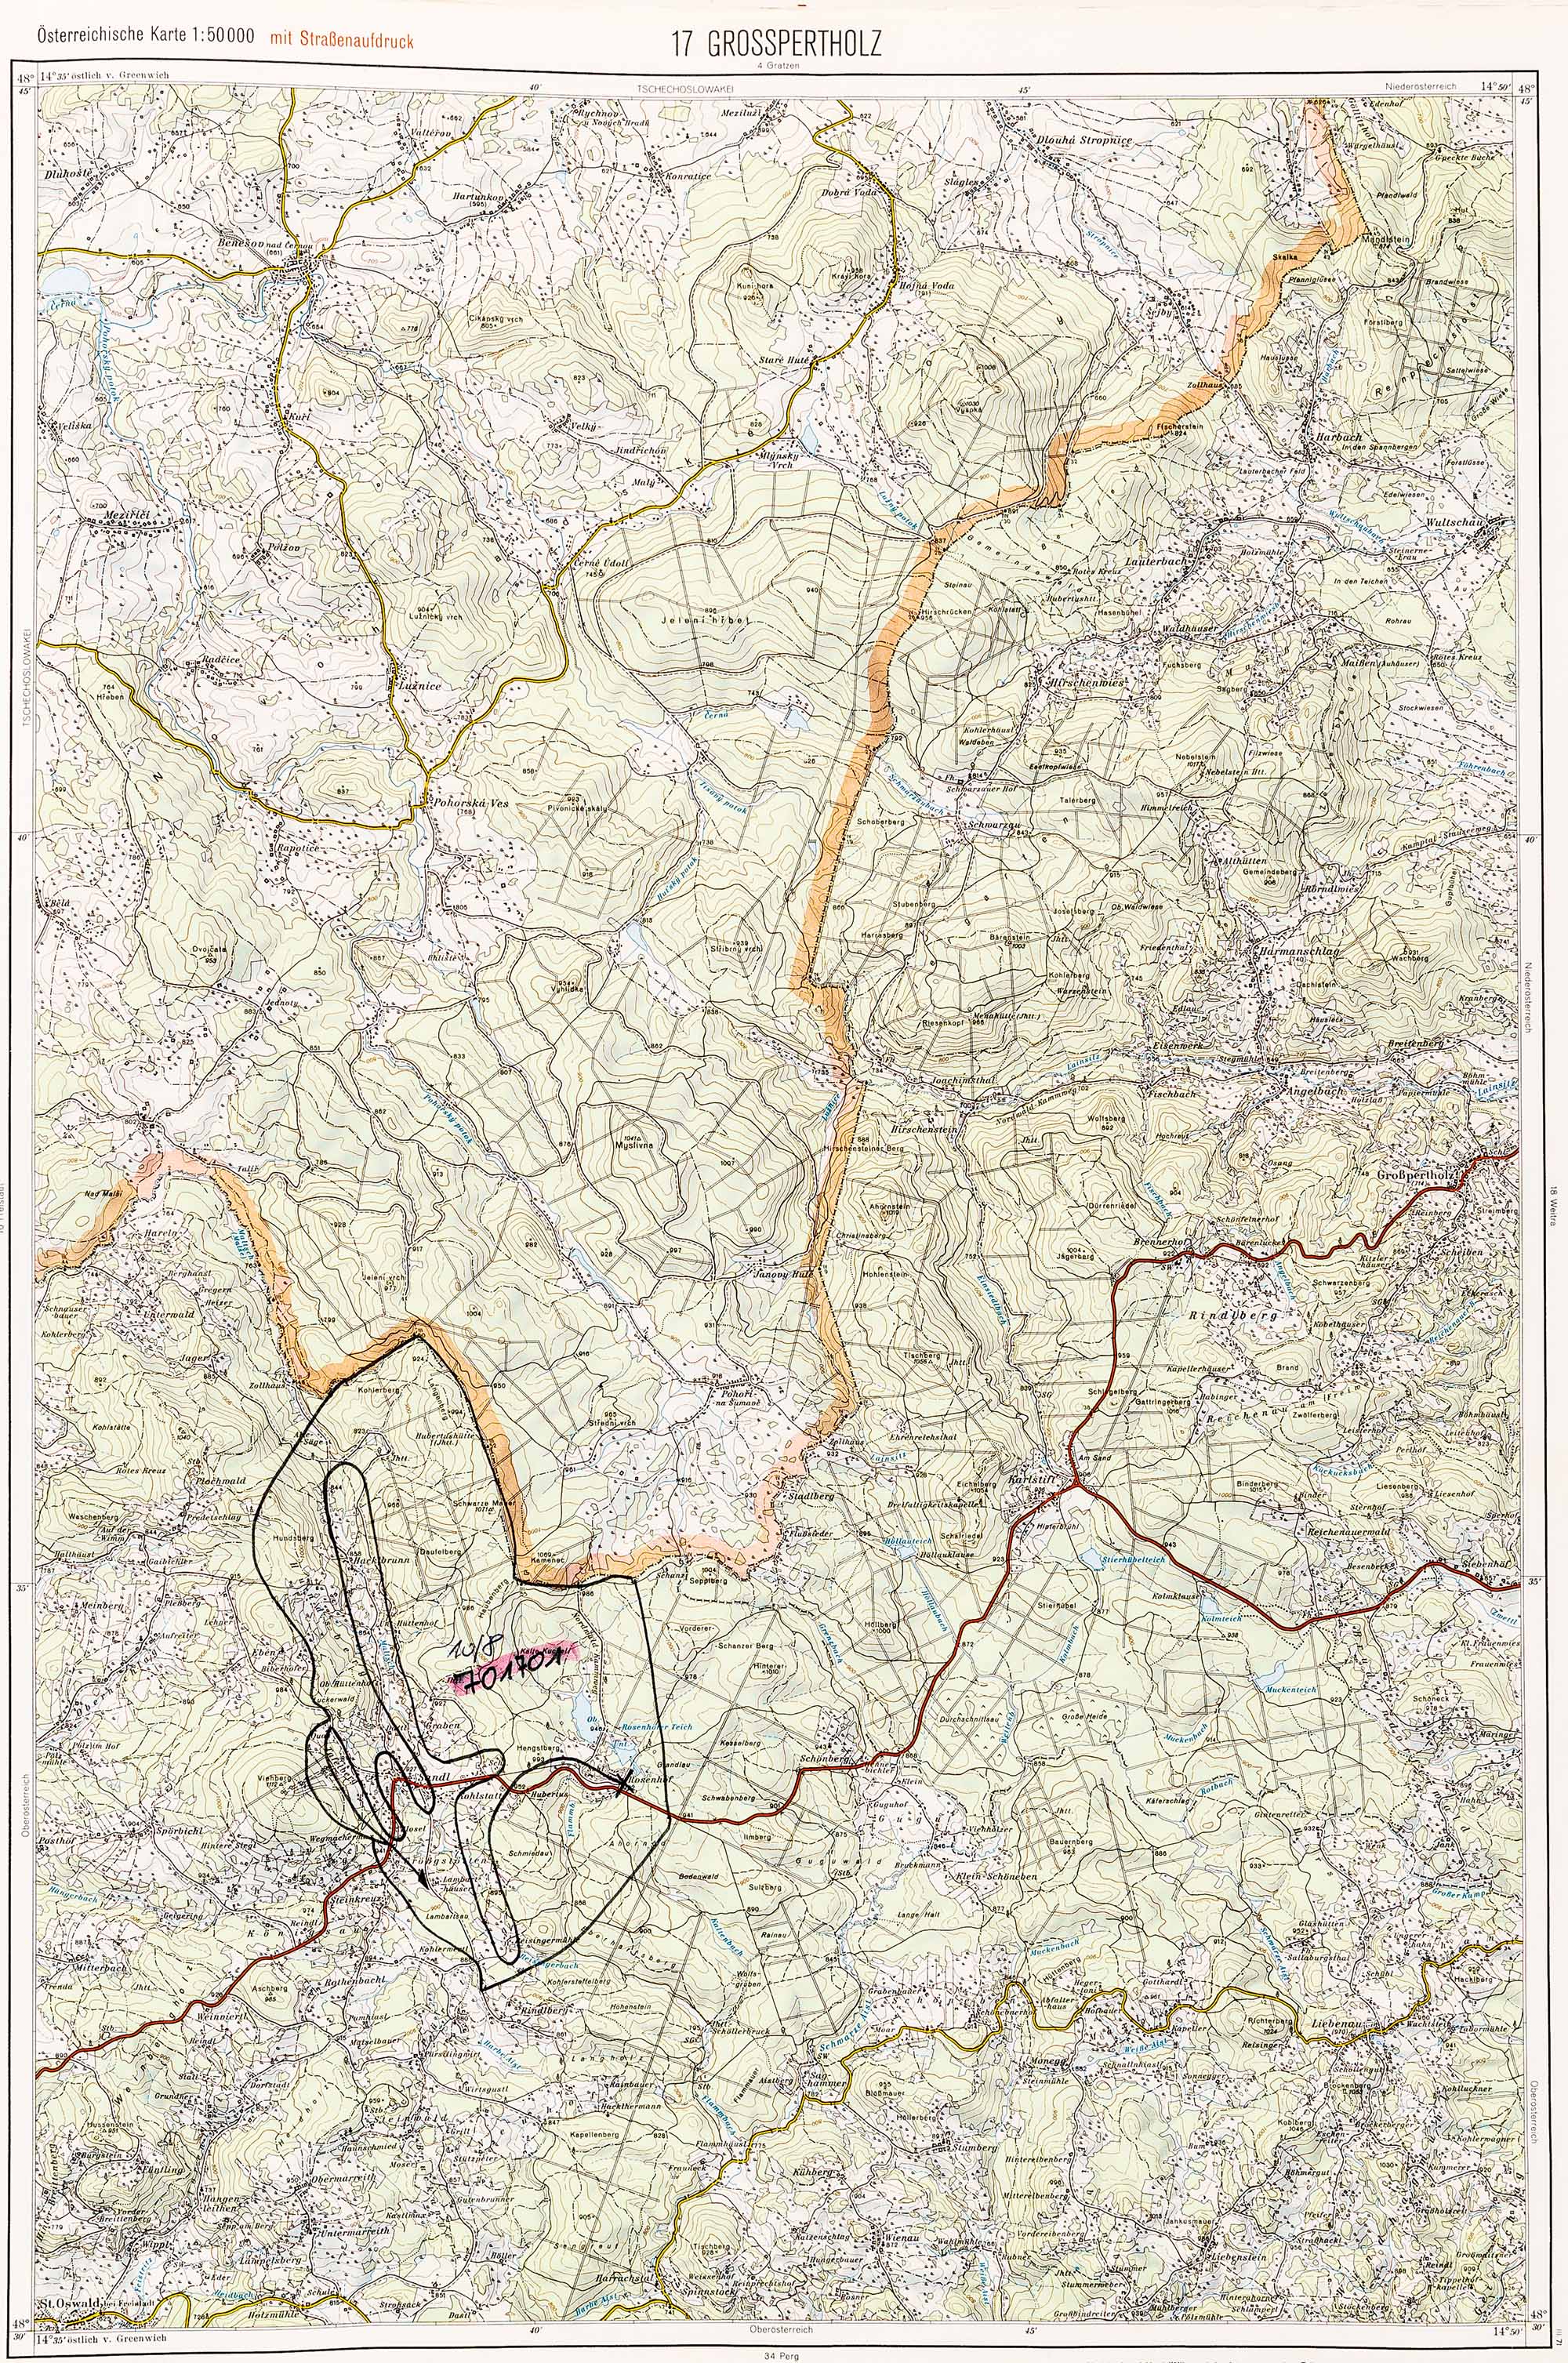 1975-1979 Karte 017